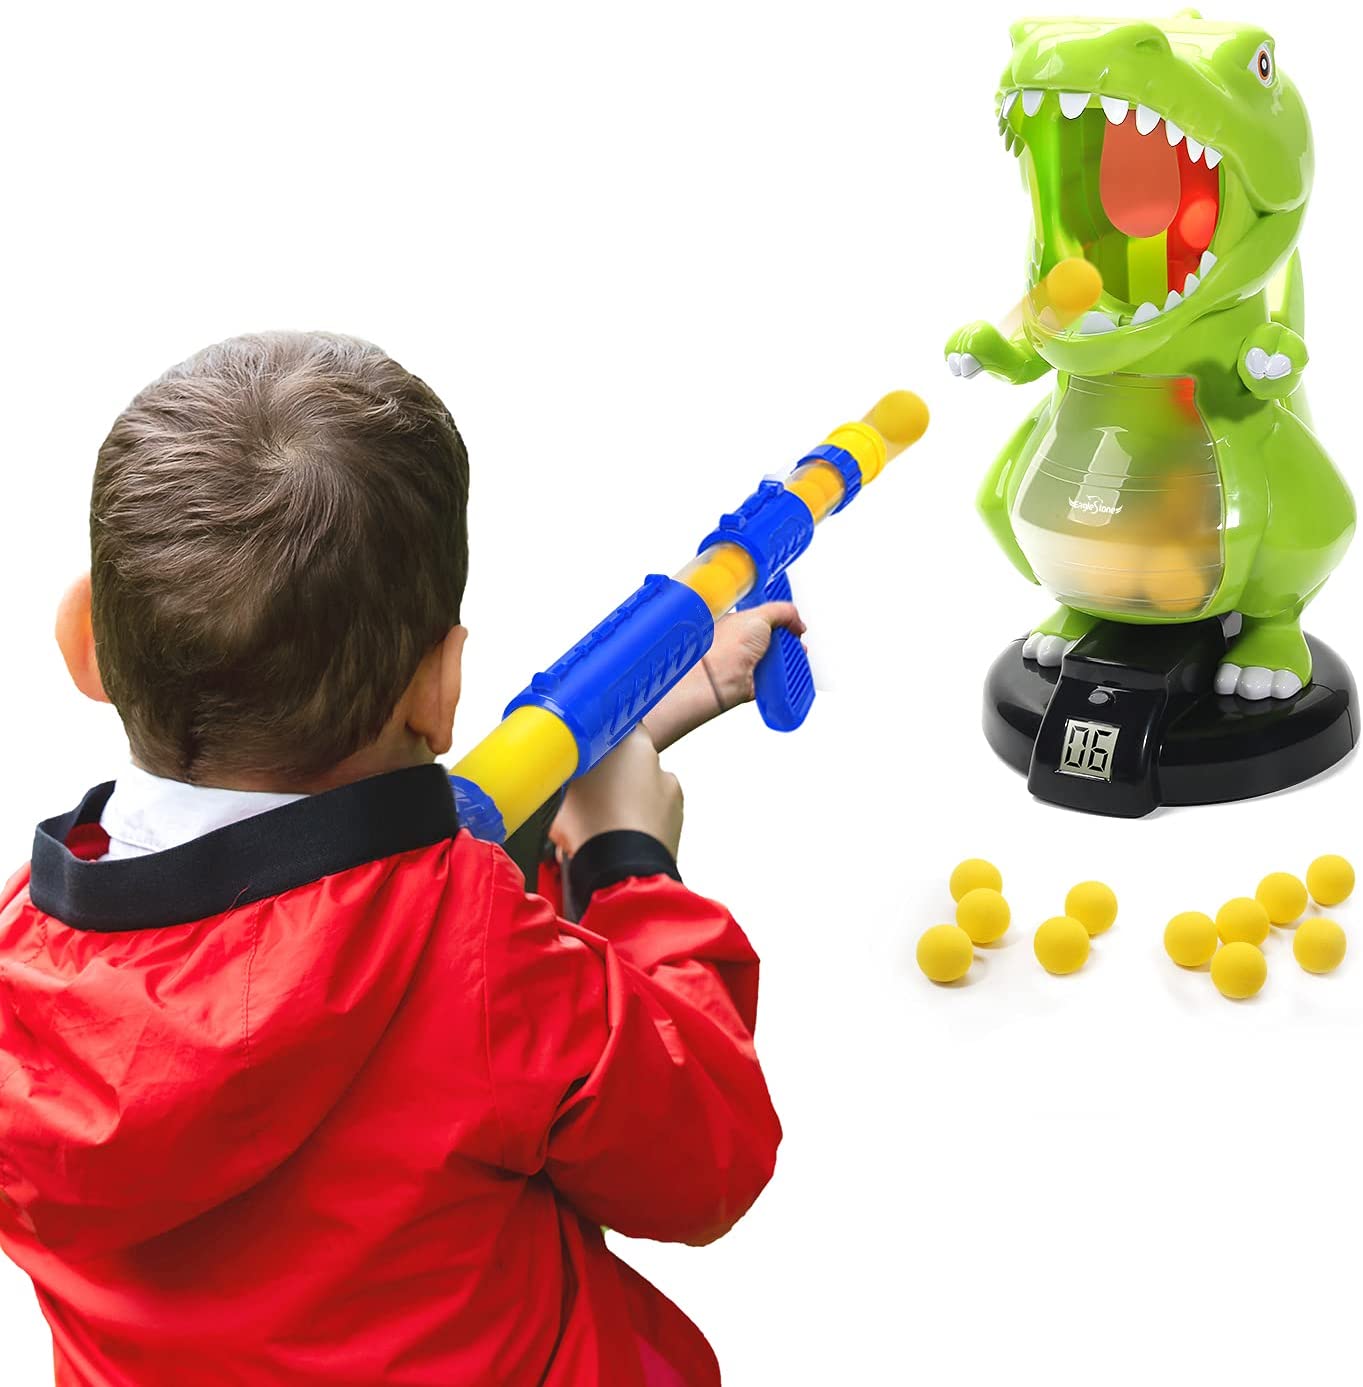 EagleStone Dinosaur Shooting Toys for Kids Target Shooting Games Air Pump Gun